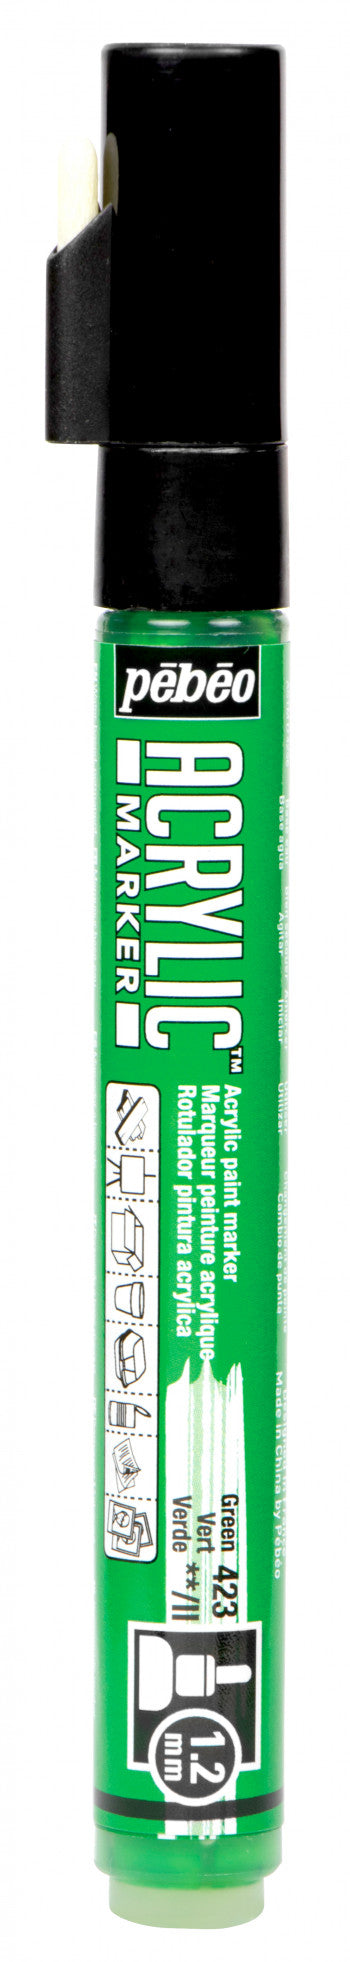 Acrylic Marker 1.2mm Pebeo Green - 423